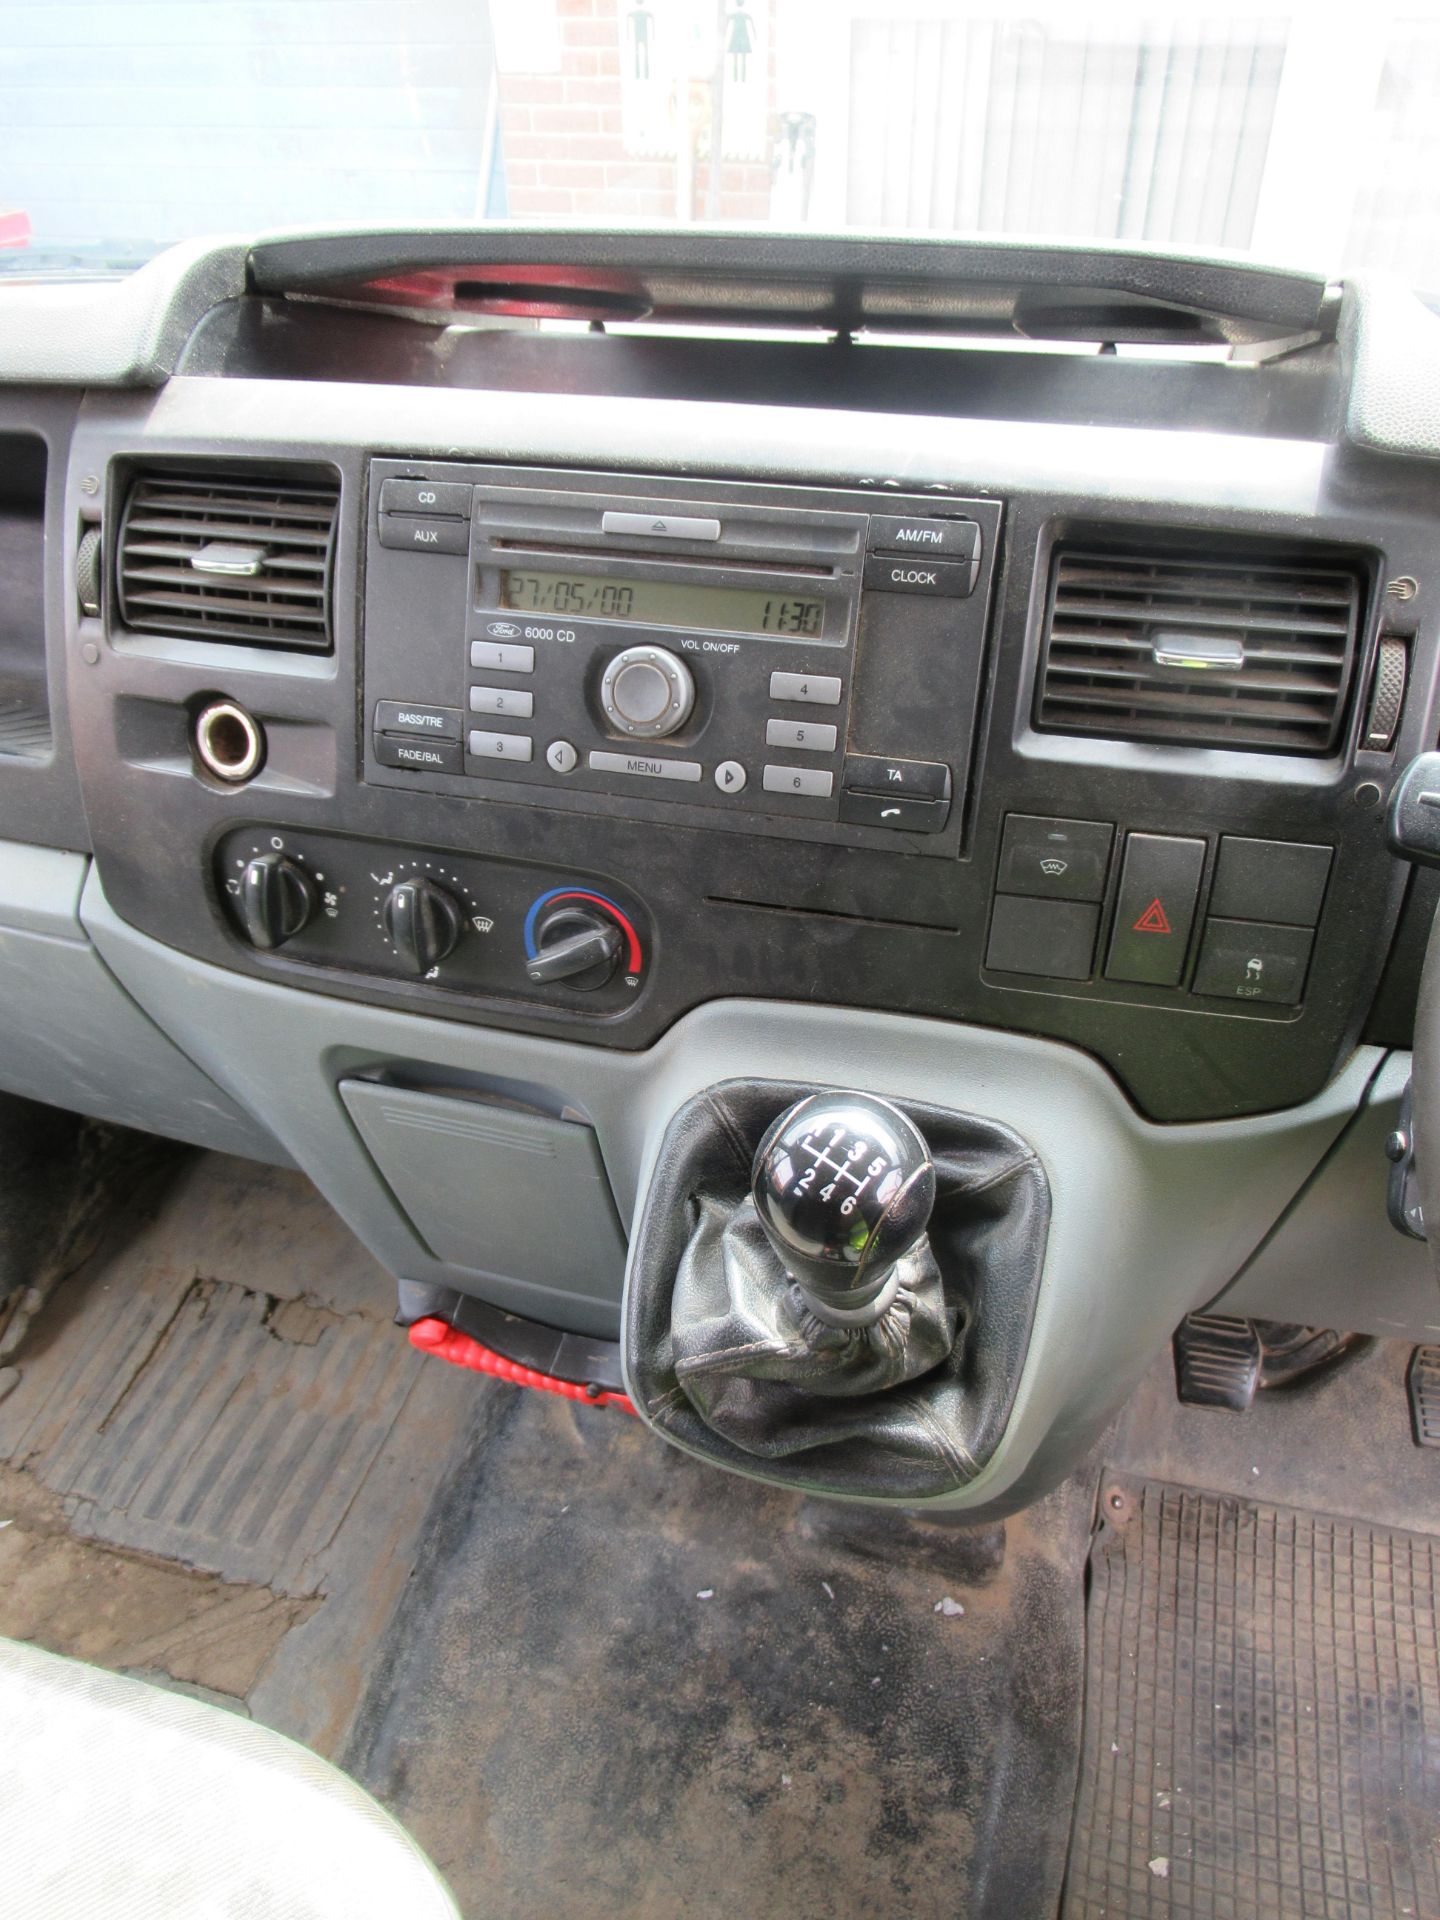 Ford Transit 100 T280 FWD diesel panel van (2014) reg no HV14 CSF - Image 10 of 10